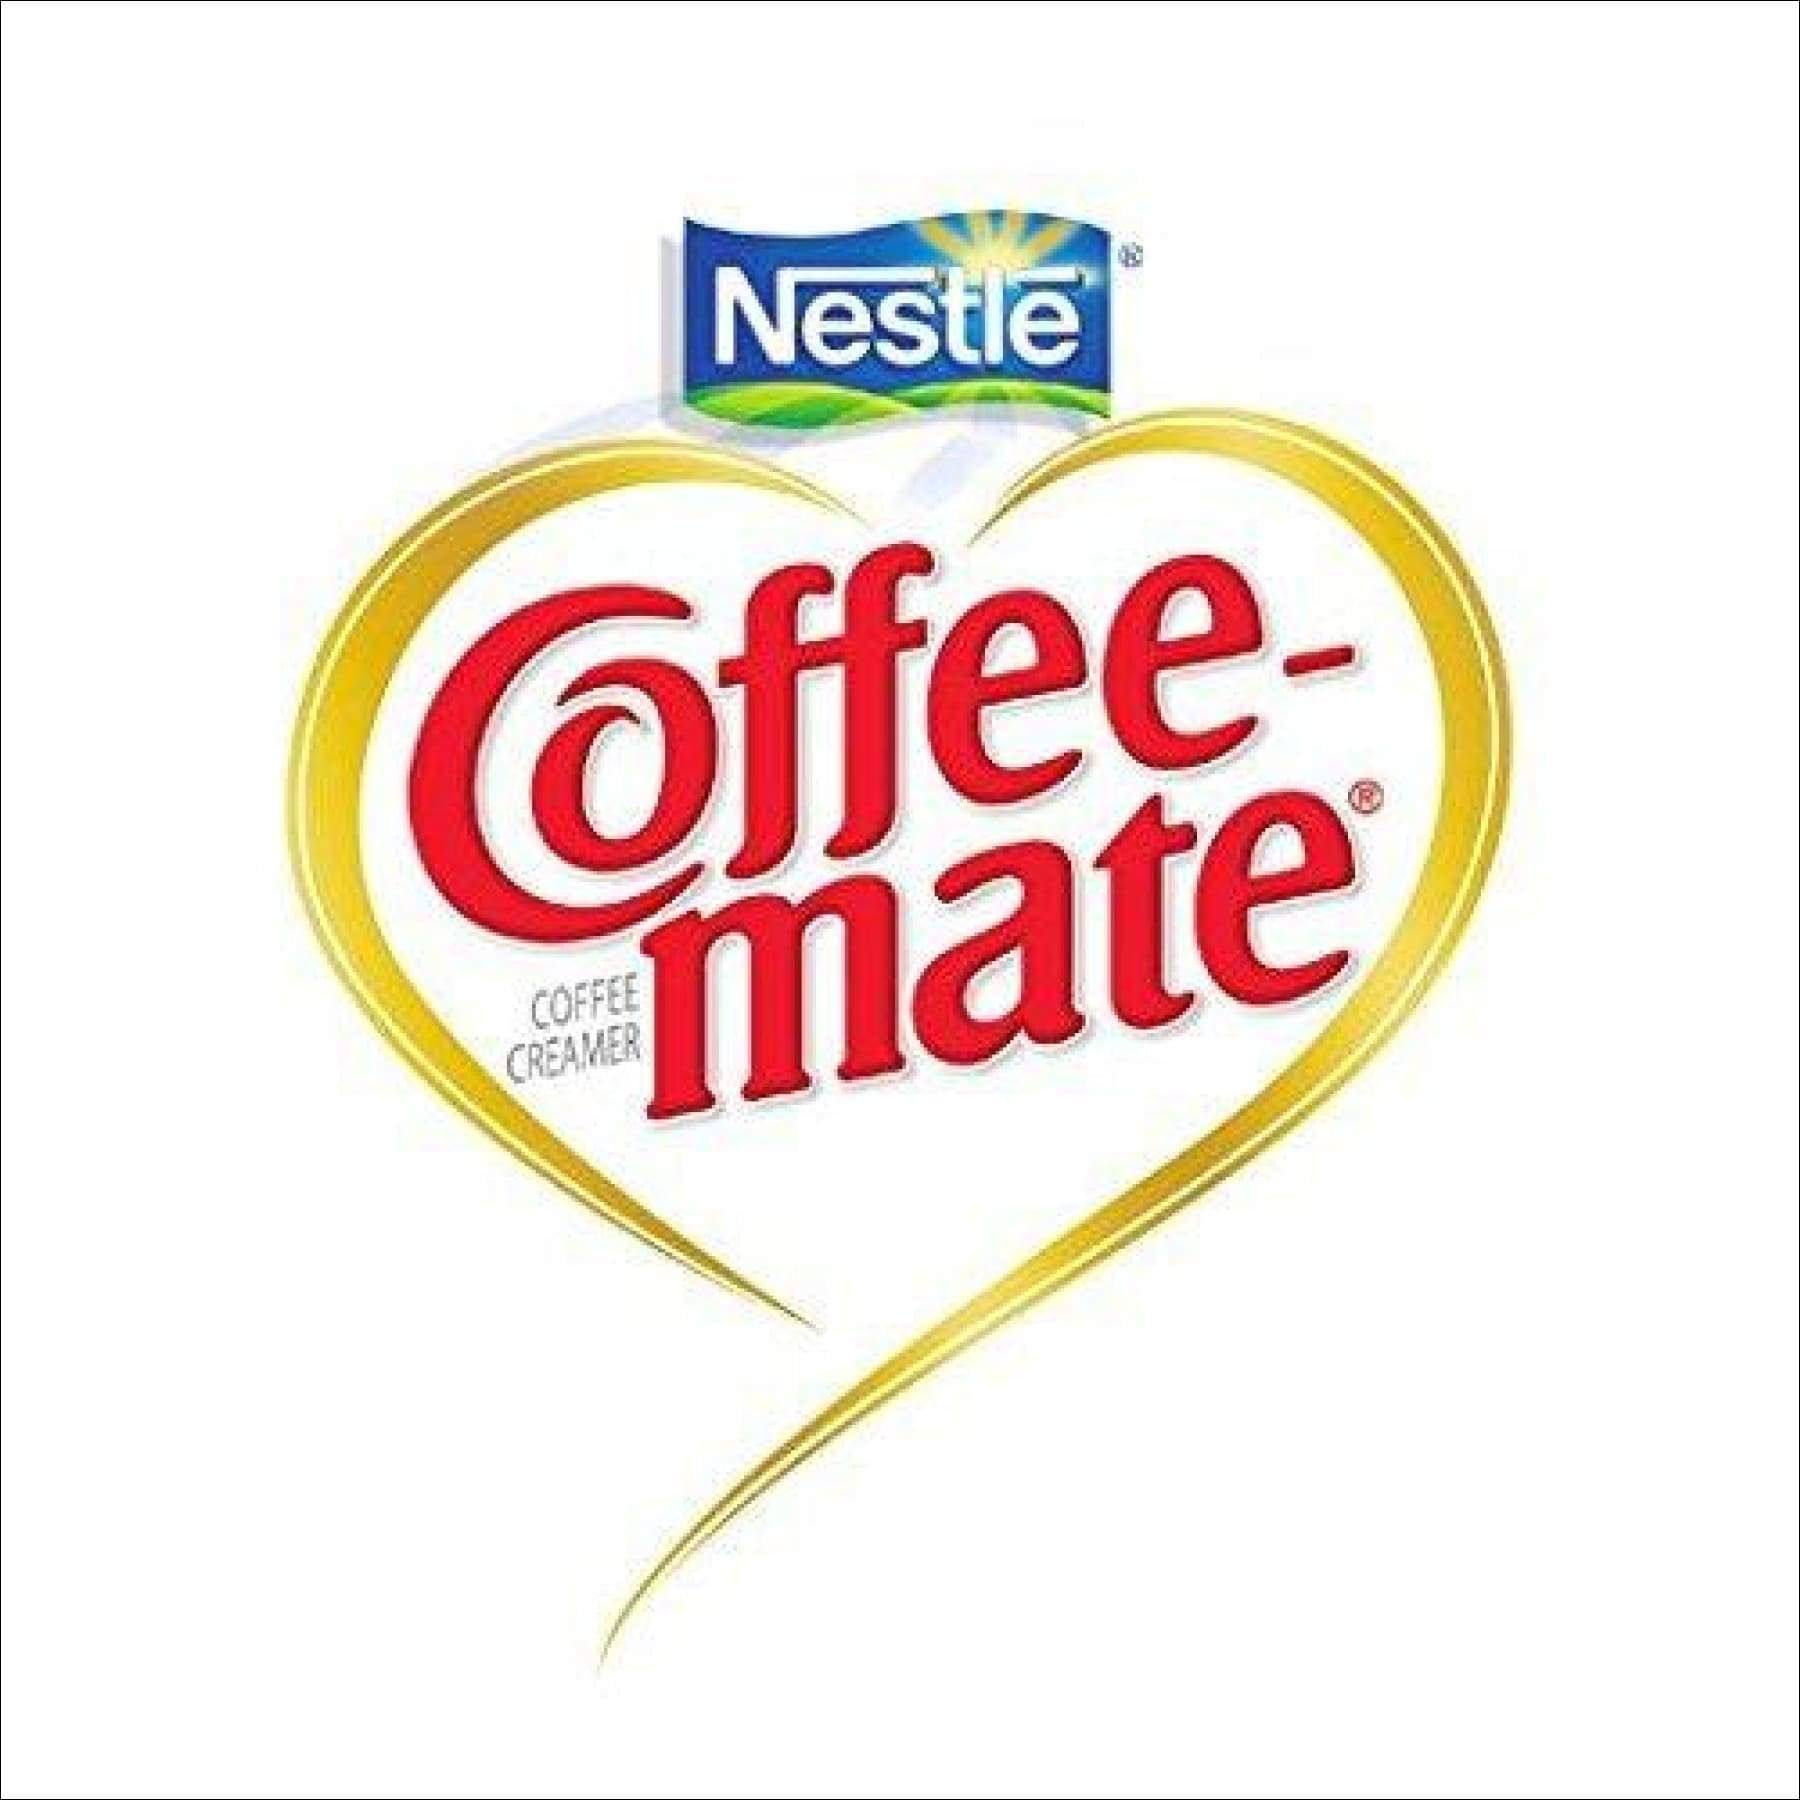  Coffee mate Liquid .375oz, 4 Flavor Variety 200 Count including  Original, Cafe Mocha, French Vanilla & Hazelnut : Home & Kitchen